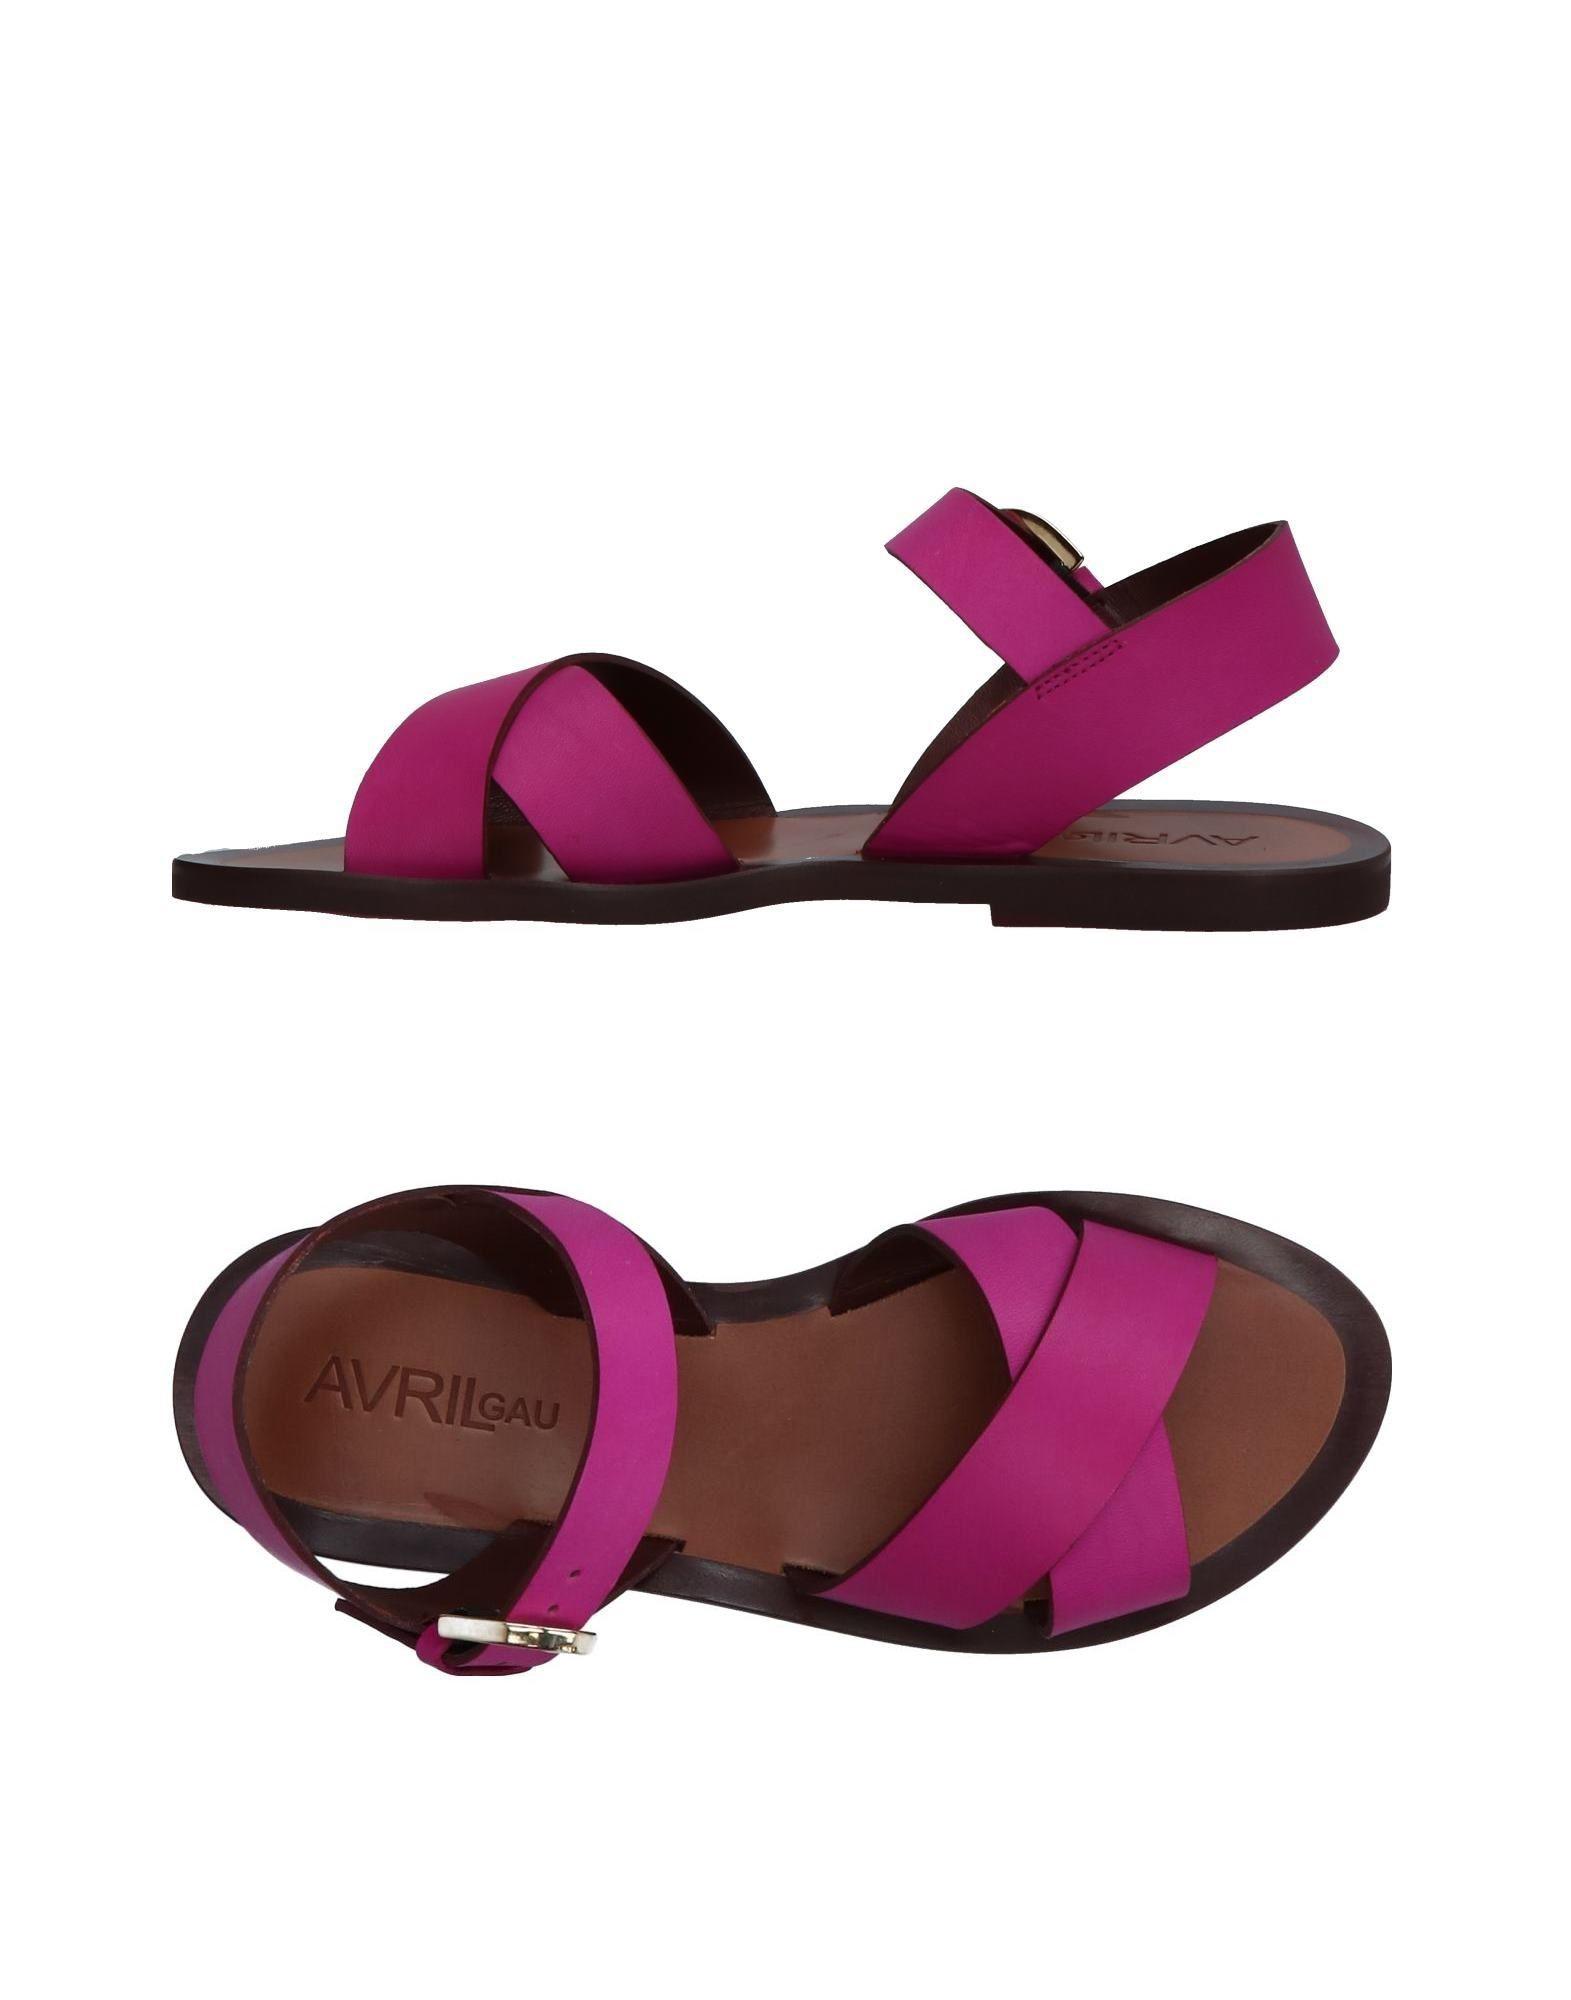 Avril Gau Leather Sandals in Fuchsia (Purple) - Lyst